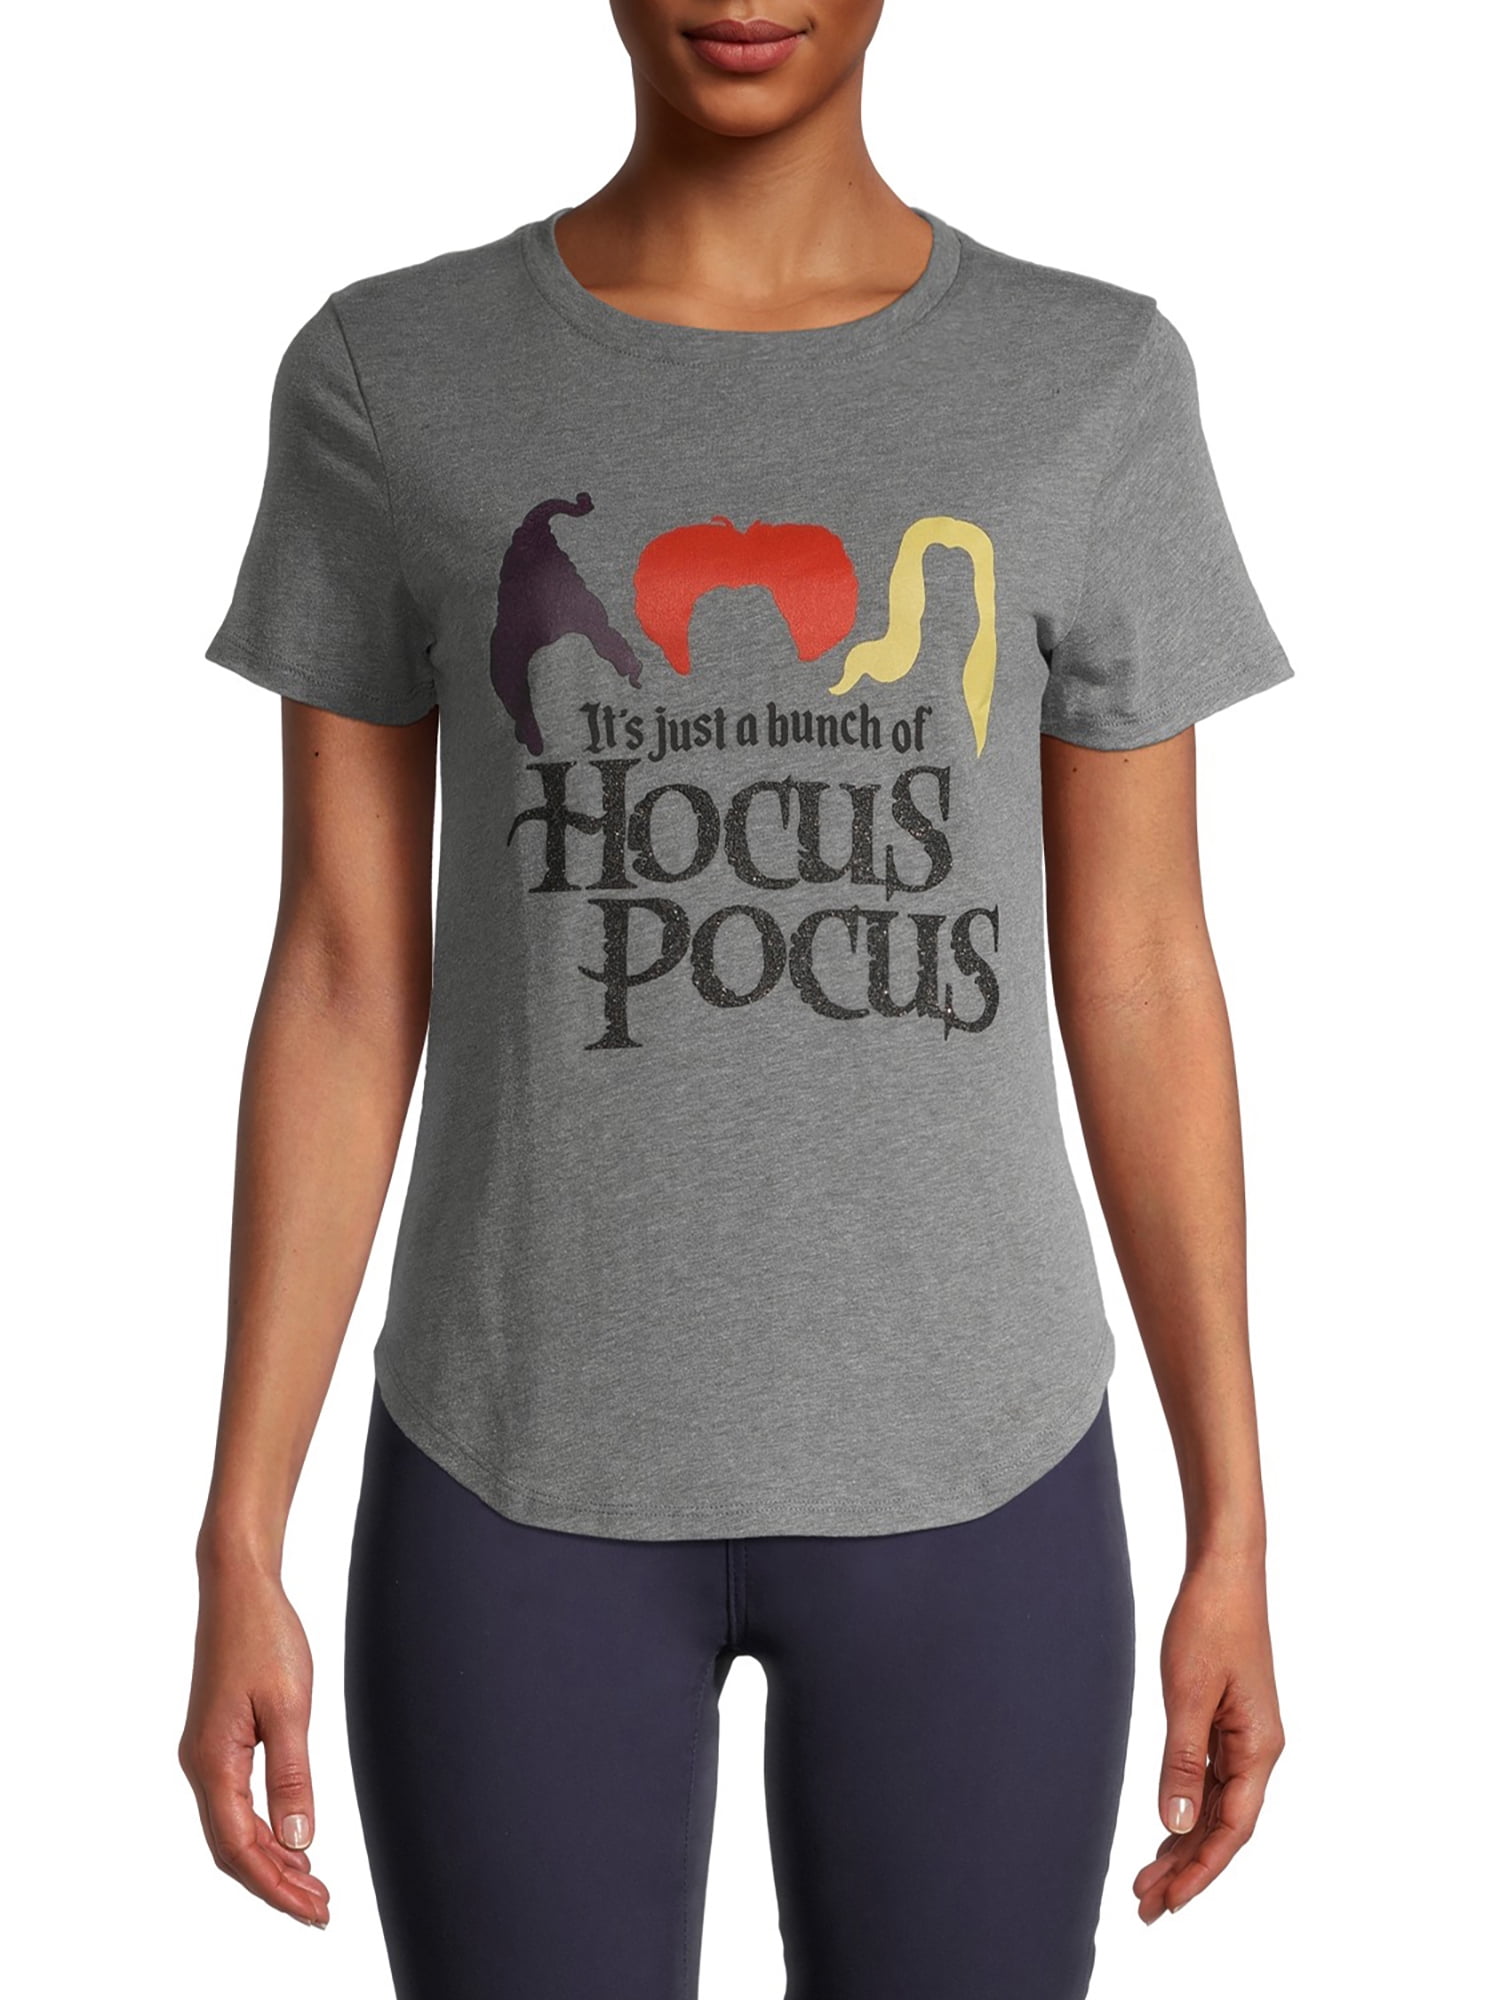 Funny Shirt Hocus Pocus Shirts Witch Shirt Halloween Shirt It's Just a Bunch of Hocus Pocus Boo Shirt Ghost Shirt Halloween T-shirt